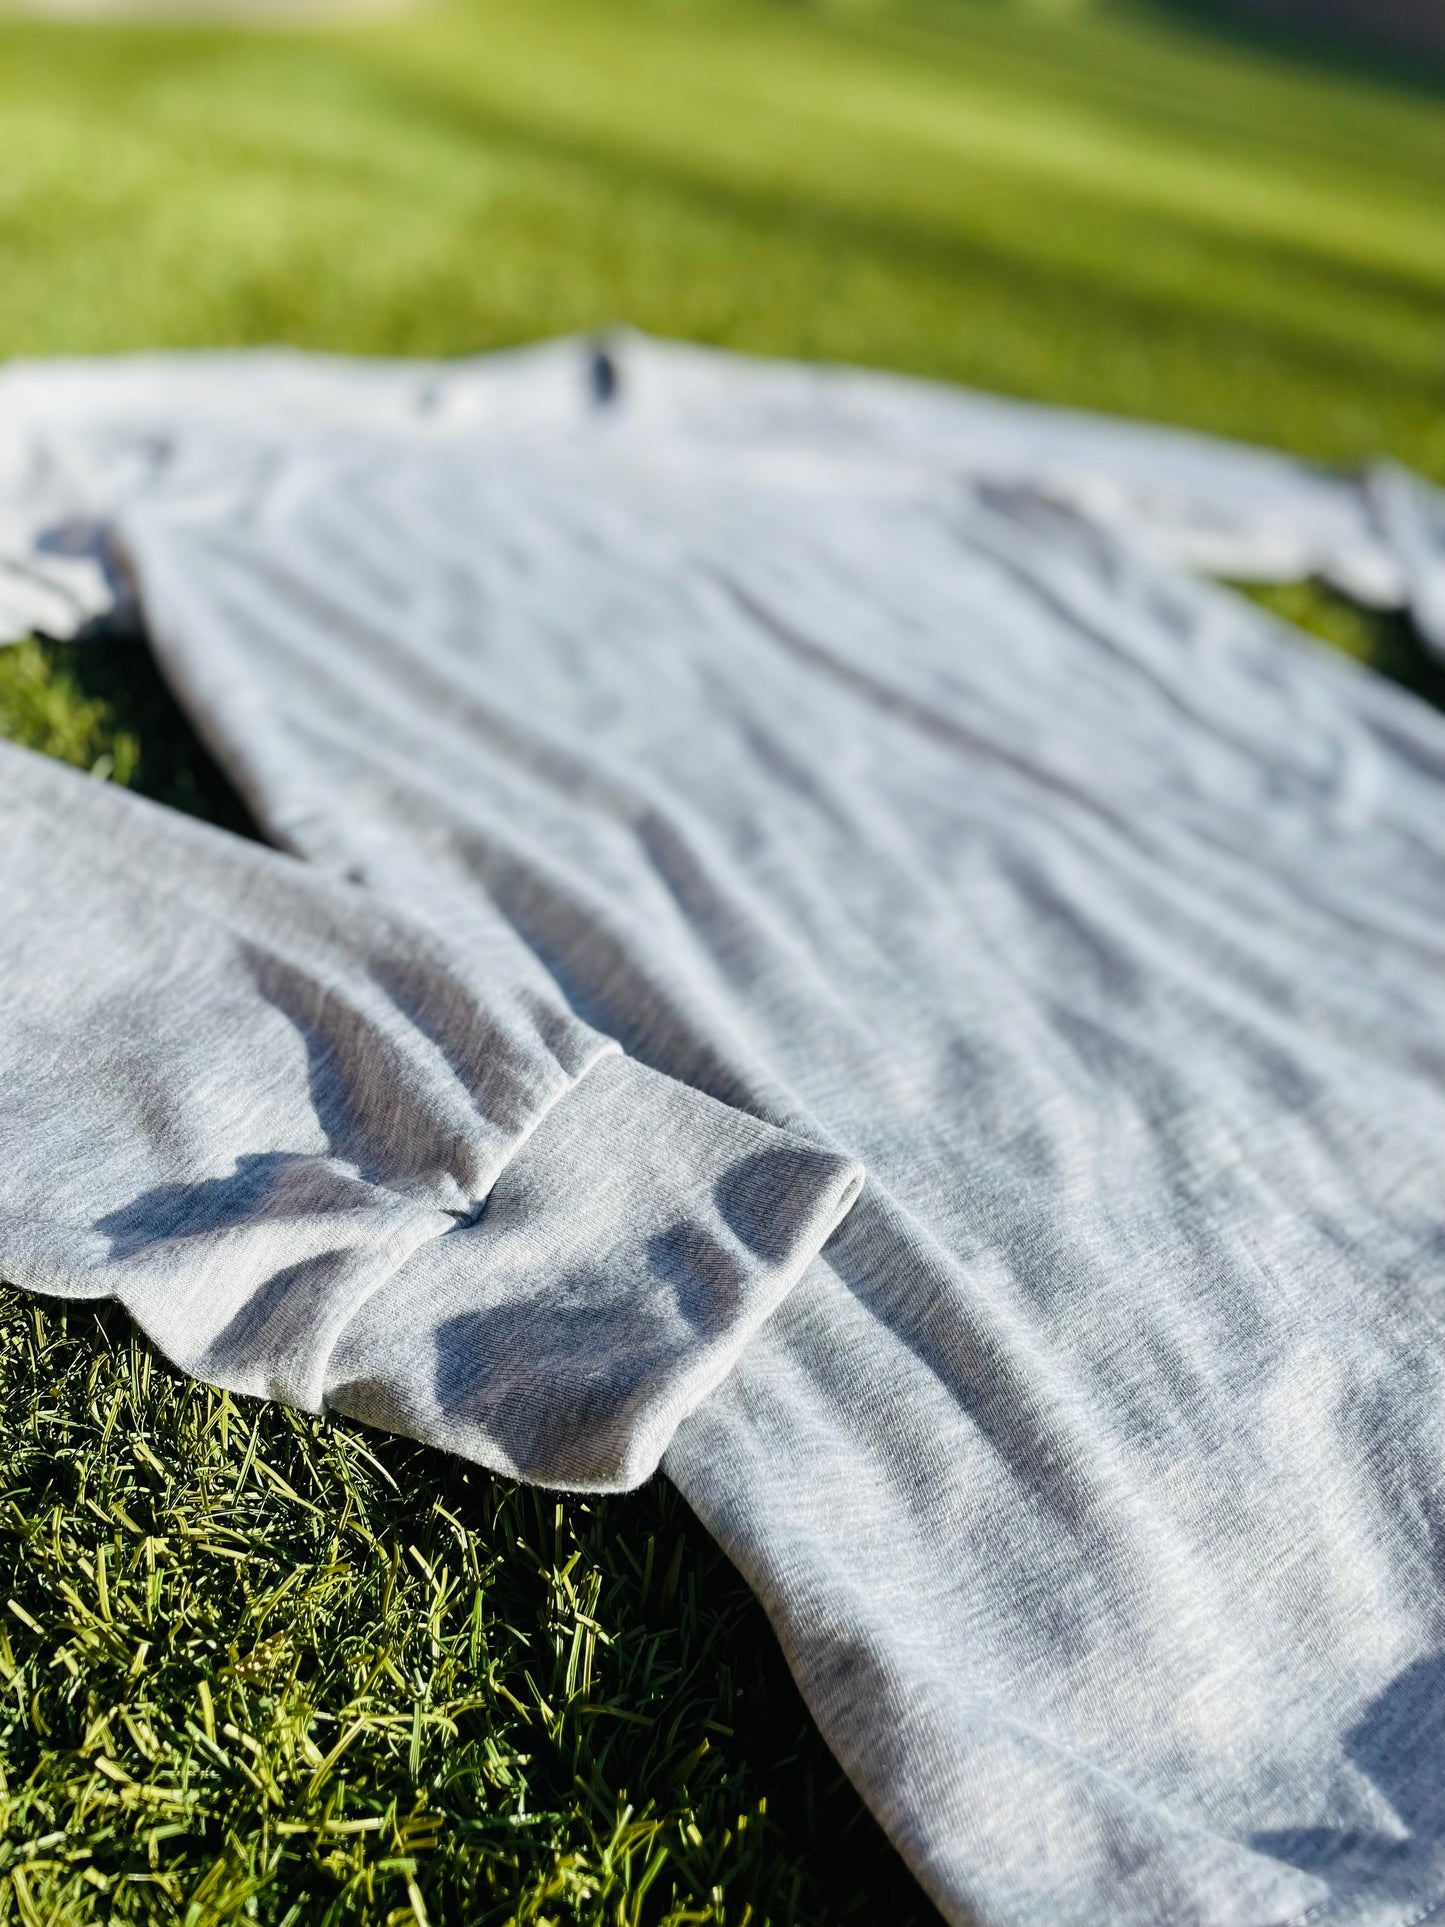 Long Sleeve 100% Polyester Shirt